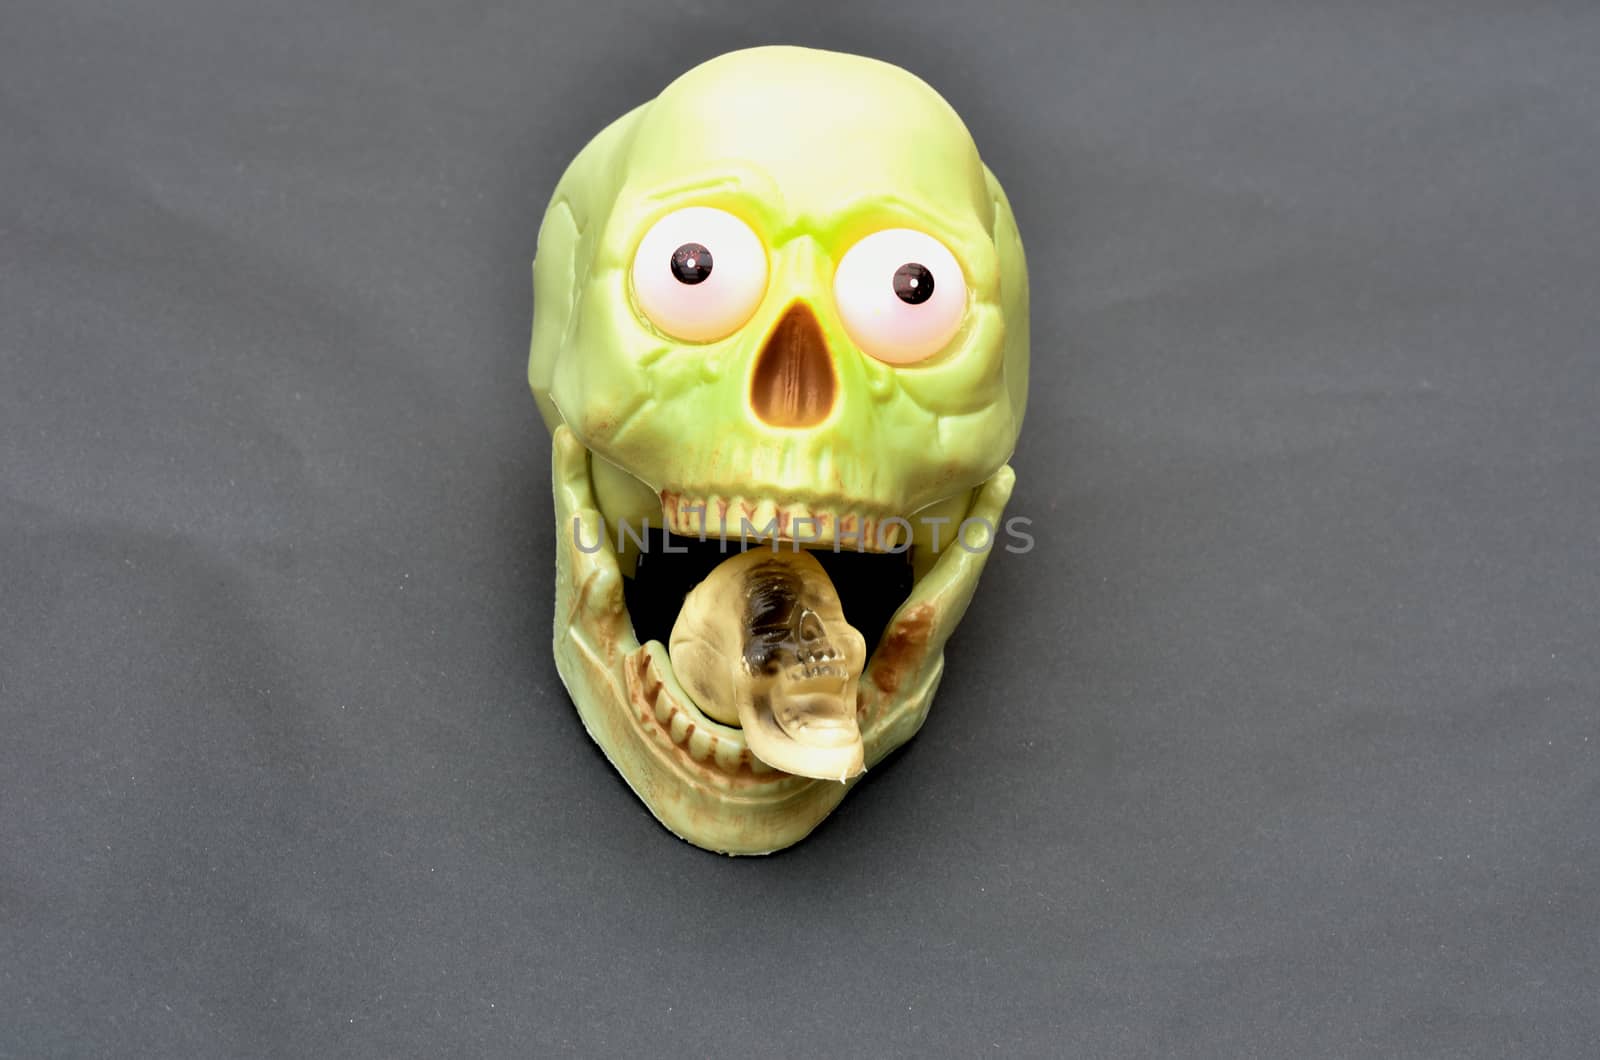 Skull eating by pauws99